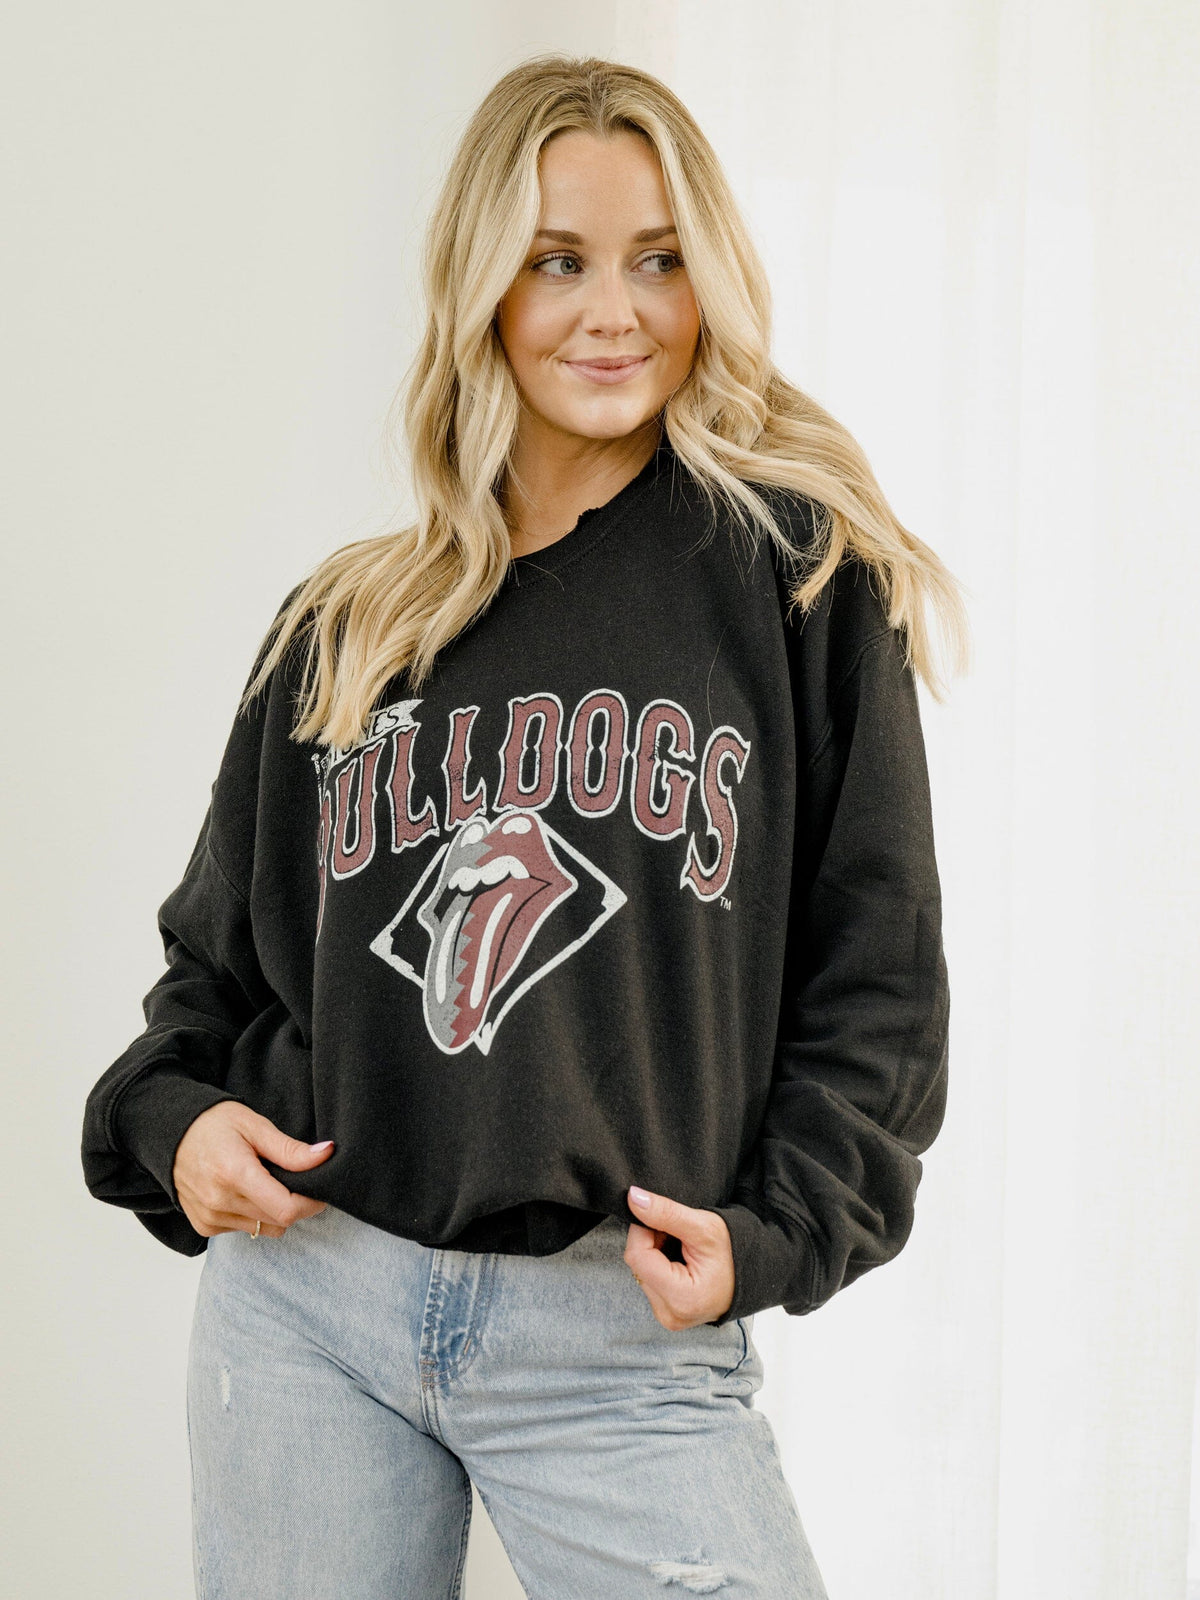 Rolling Stones MSU Bulldogs Baseball Diamond Black Thrifted Sweatshirt